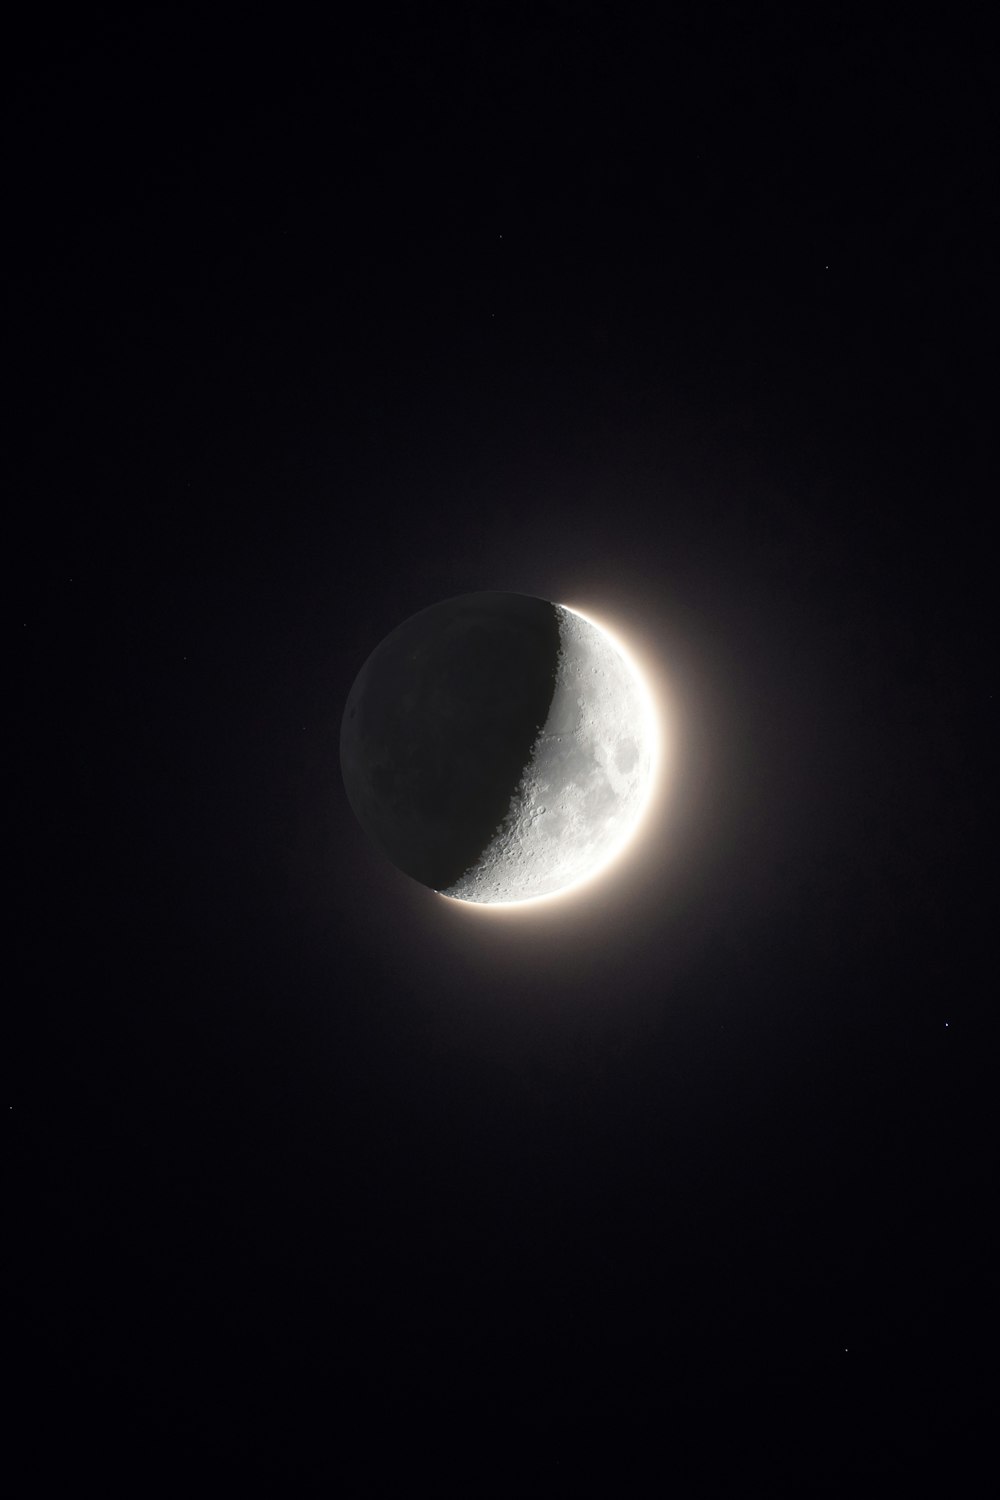 La luna se ve frente a un fondo negro